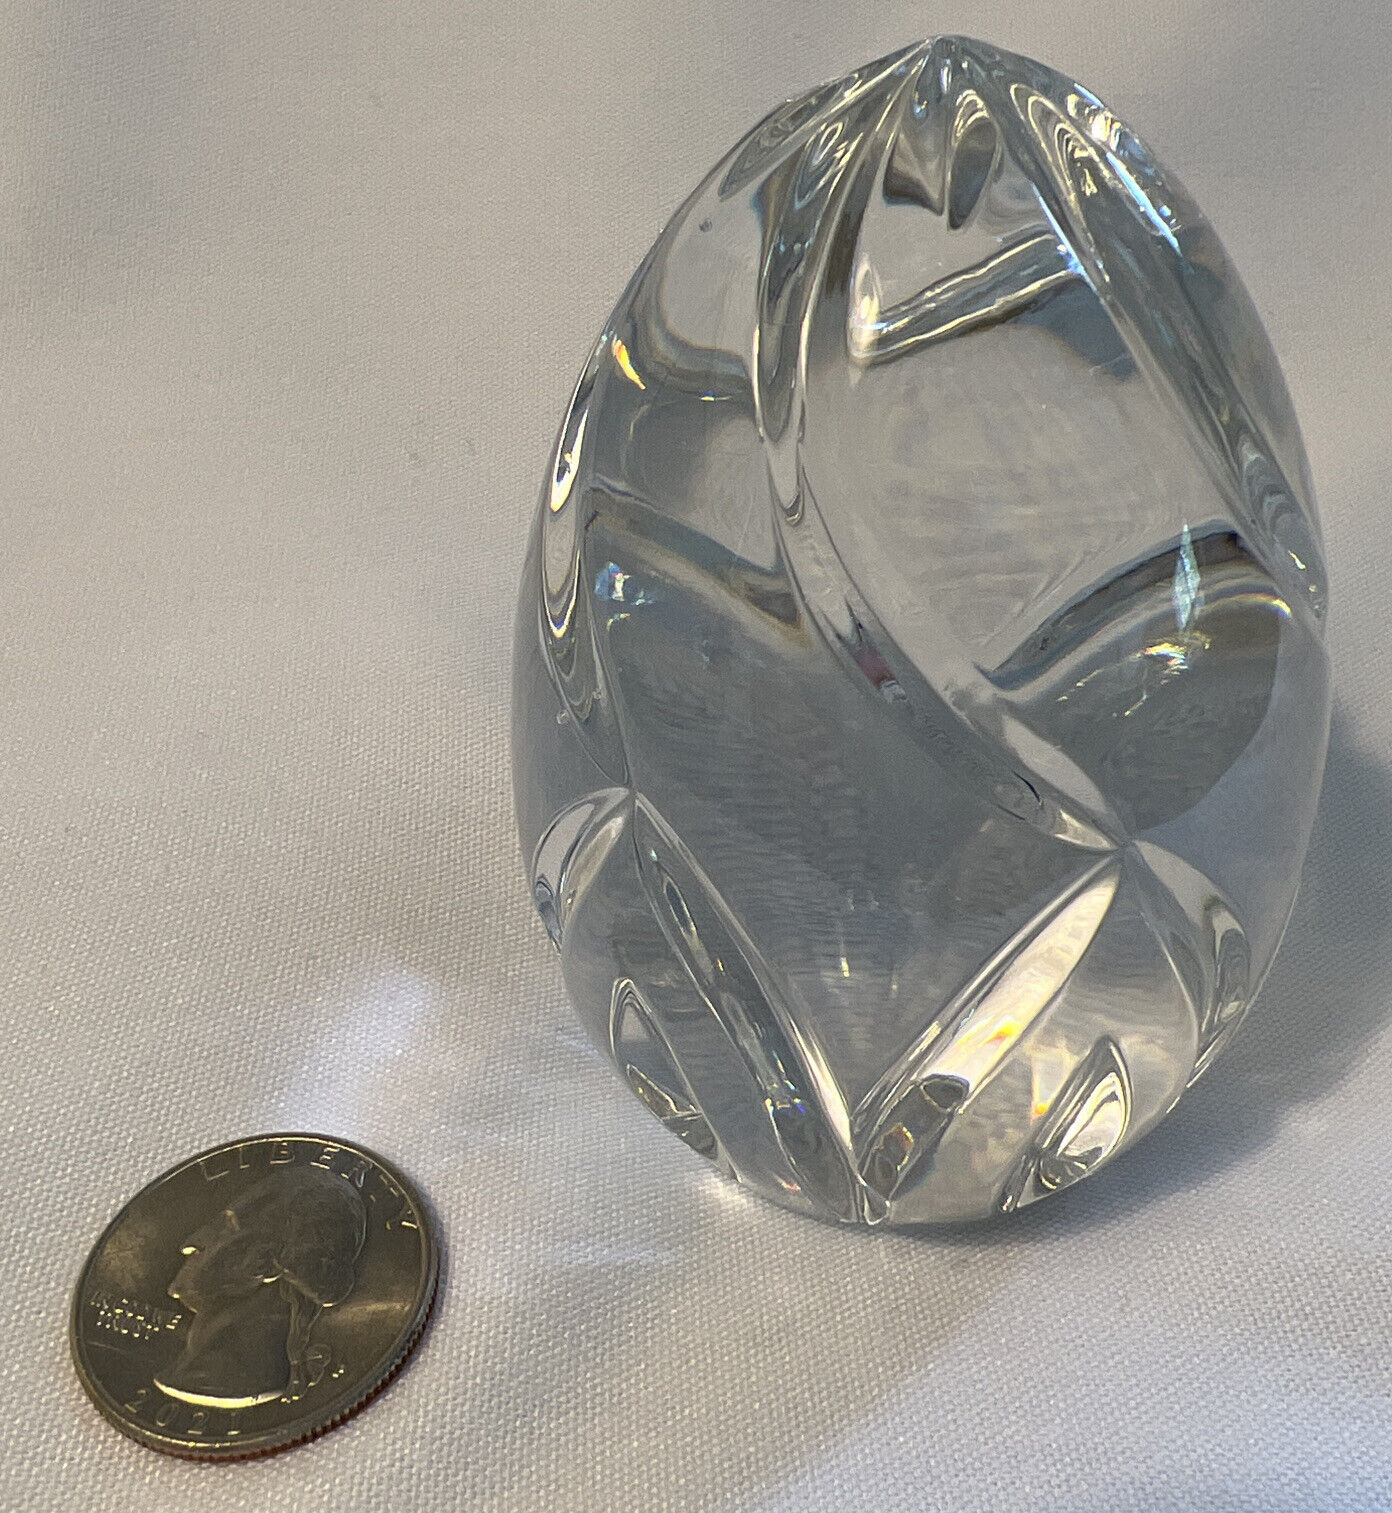 VTG Sullivans Handmade 24% PbO Crystal Egg Paperweight Cut Glass Art Made Poland